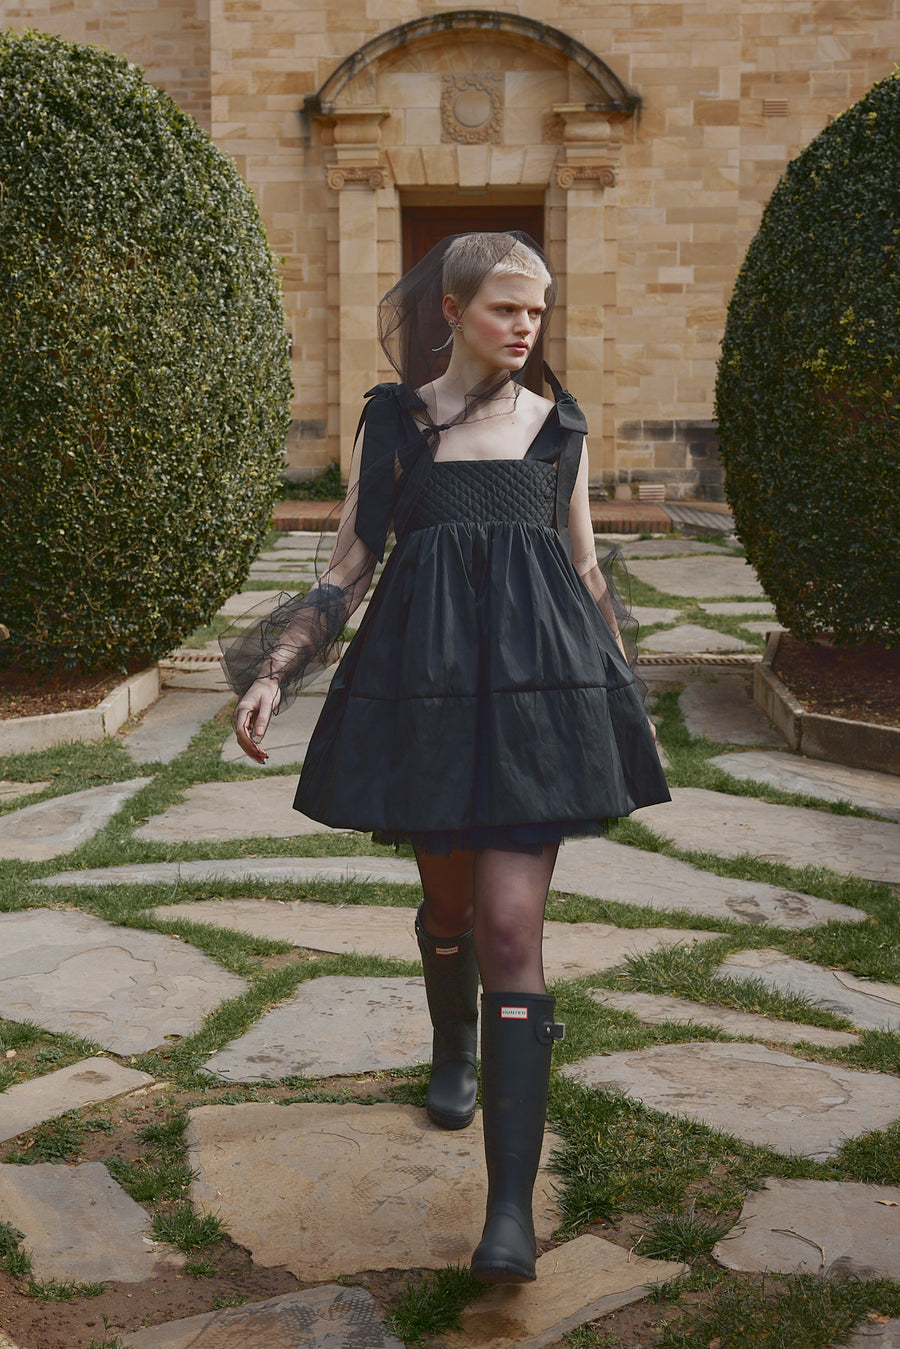 The black taffeta Dolly Mini Dress by Australian designer label House of Campbell.